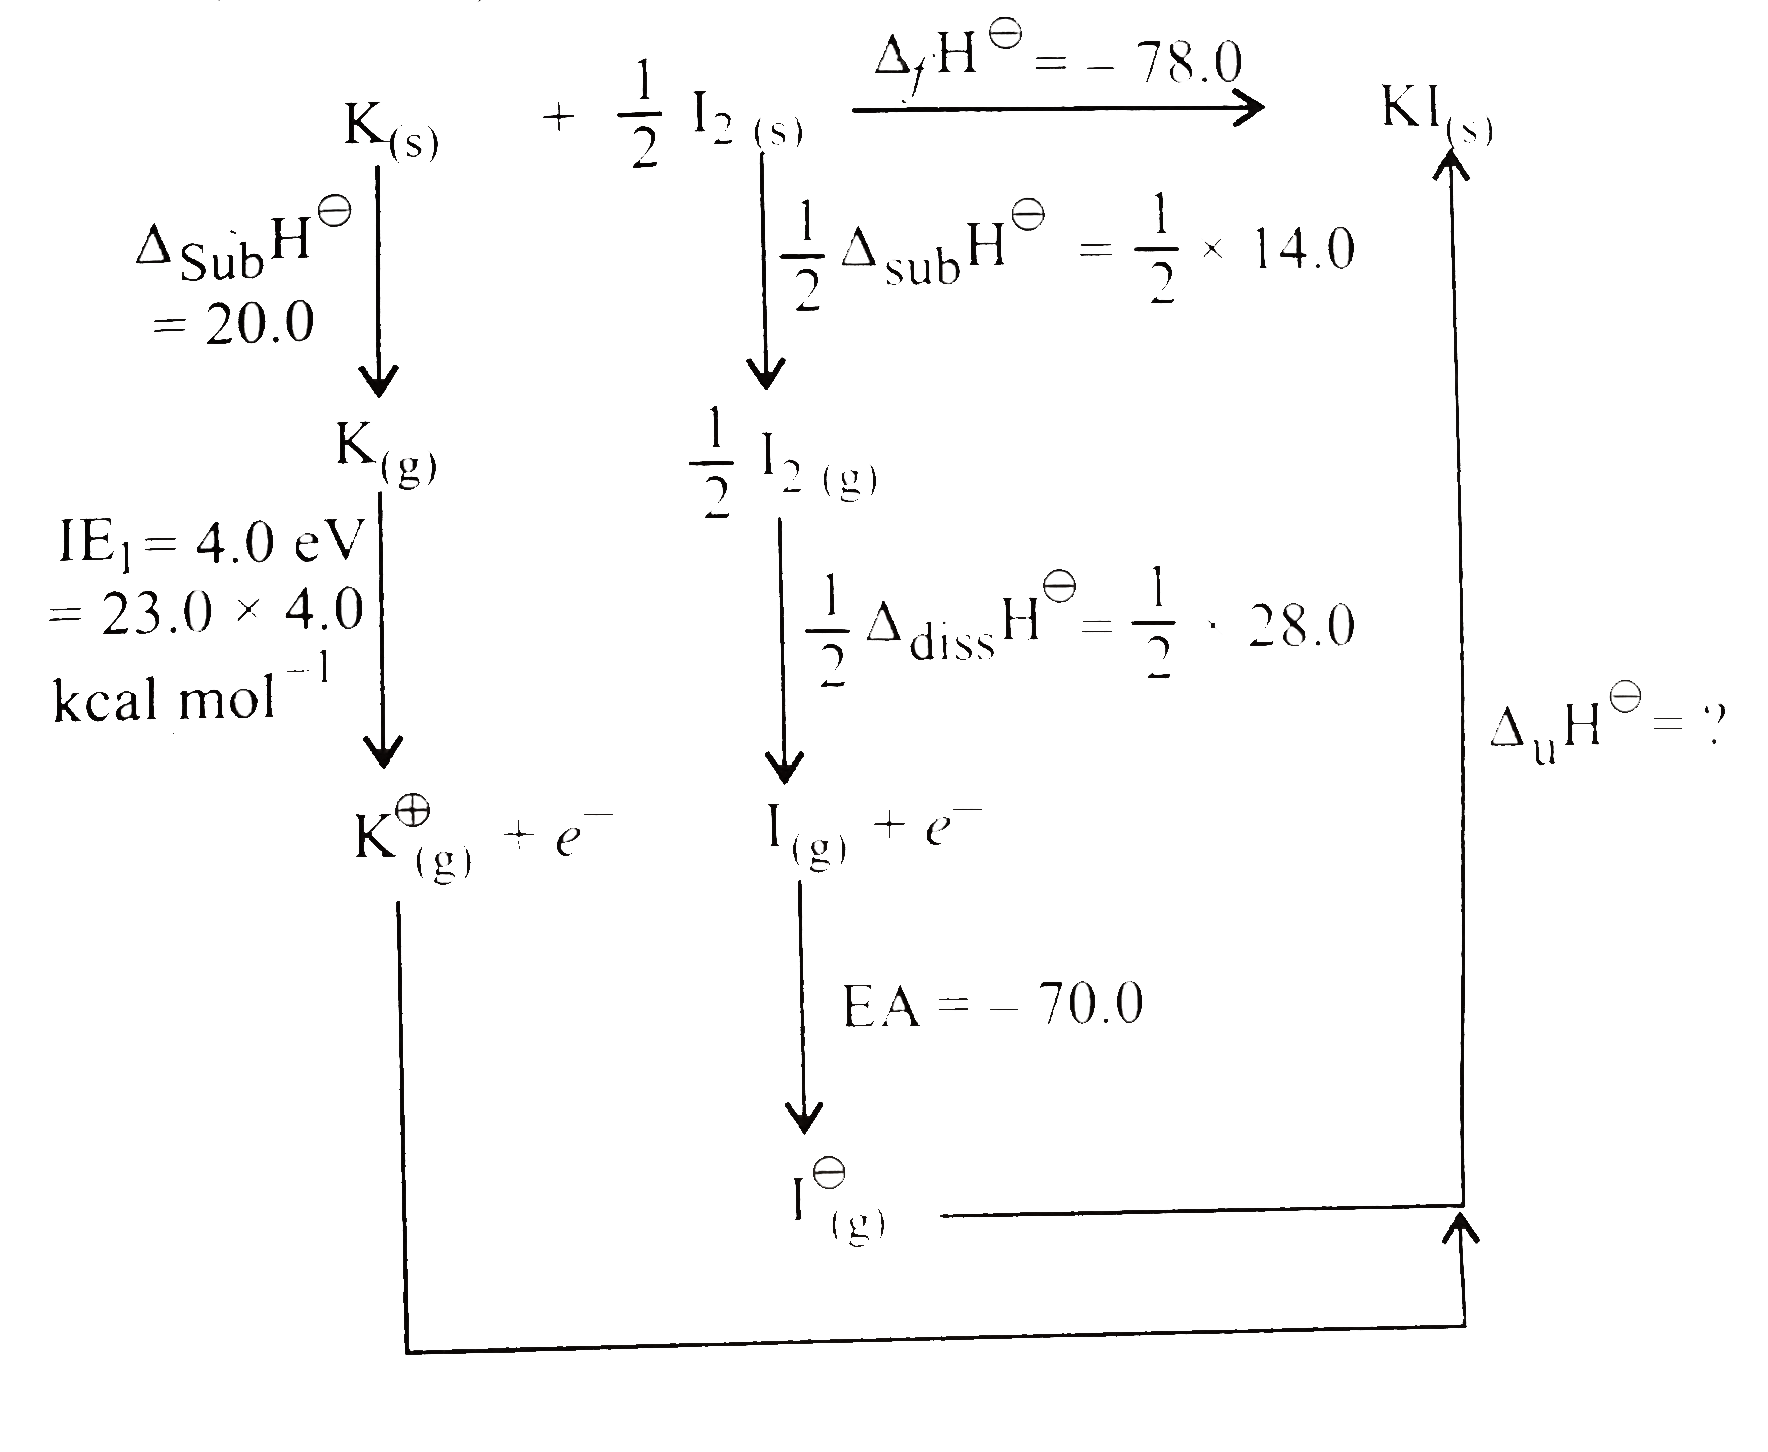 equation of lattice energy of nacl